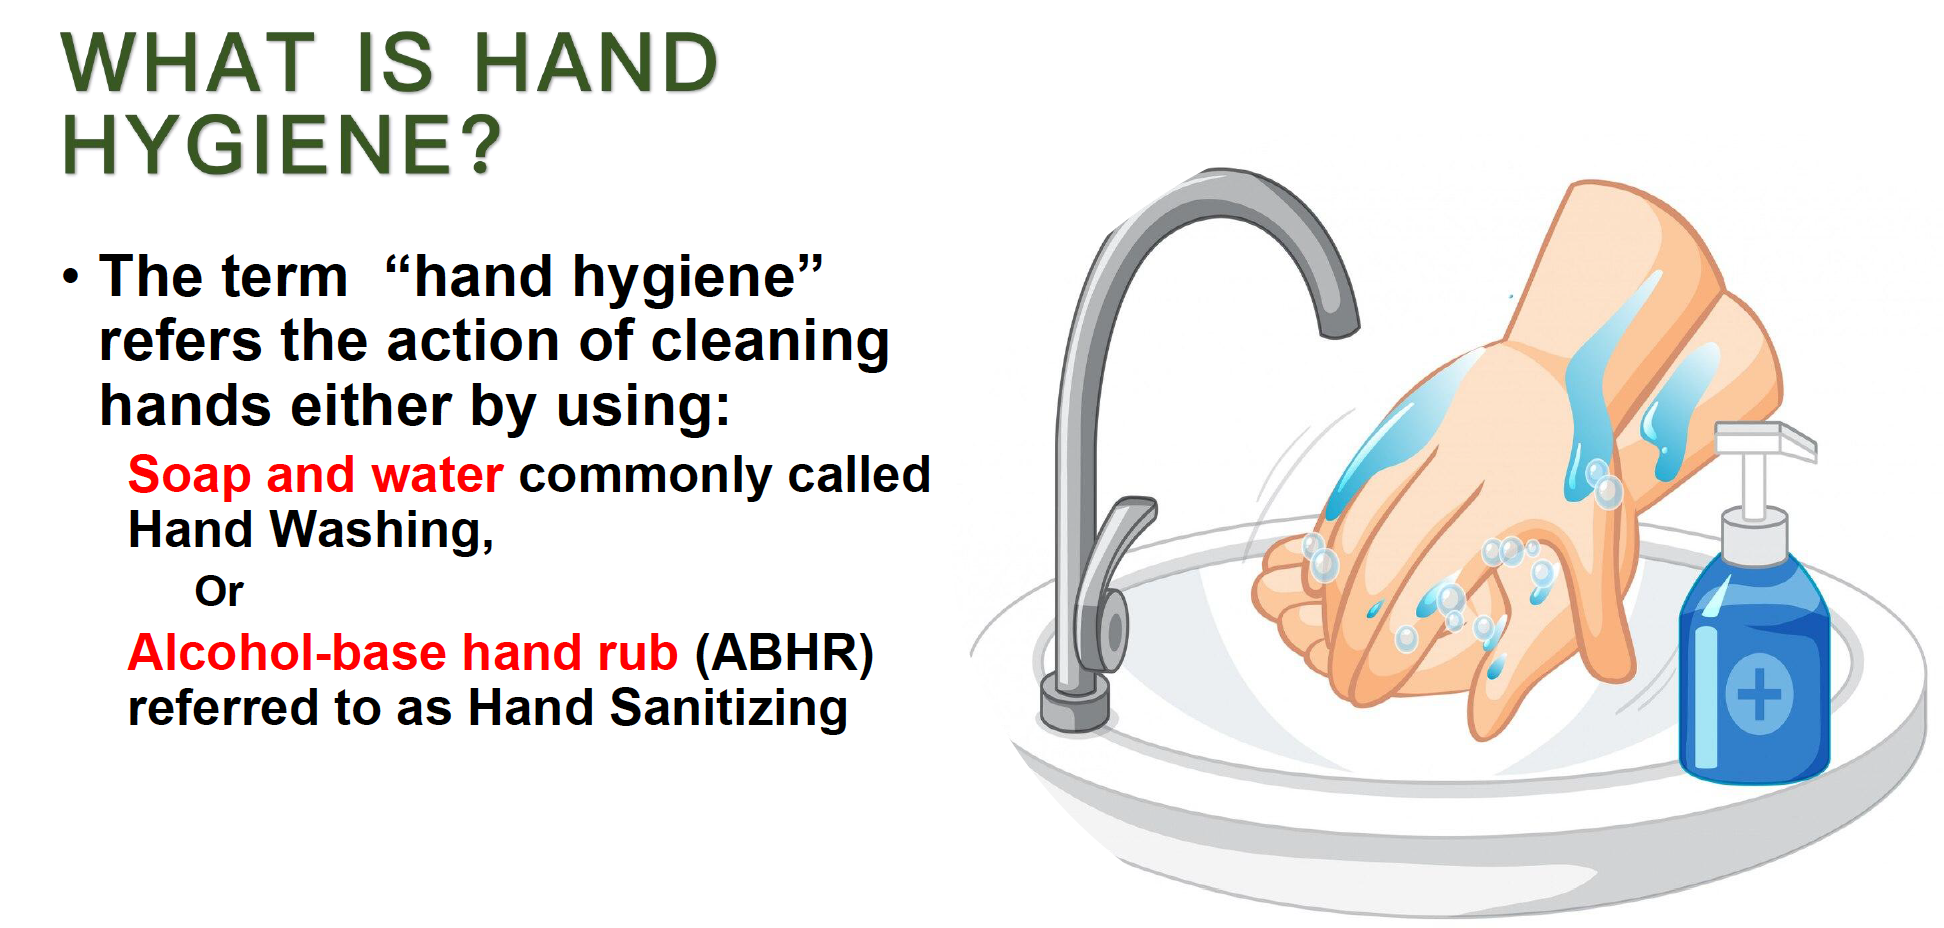 Implementation of hand hygiene